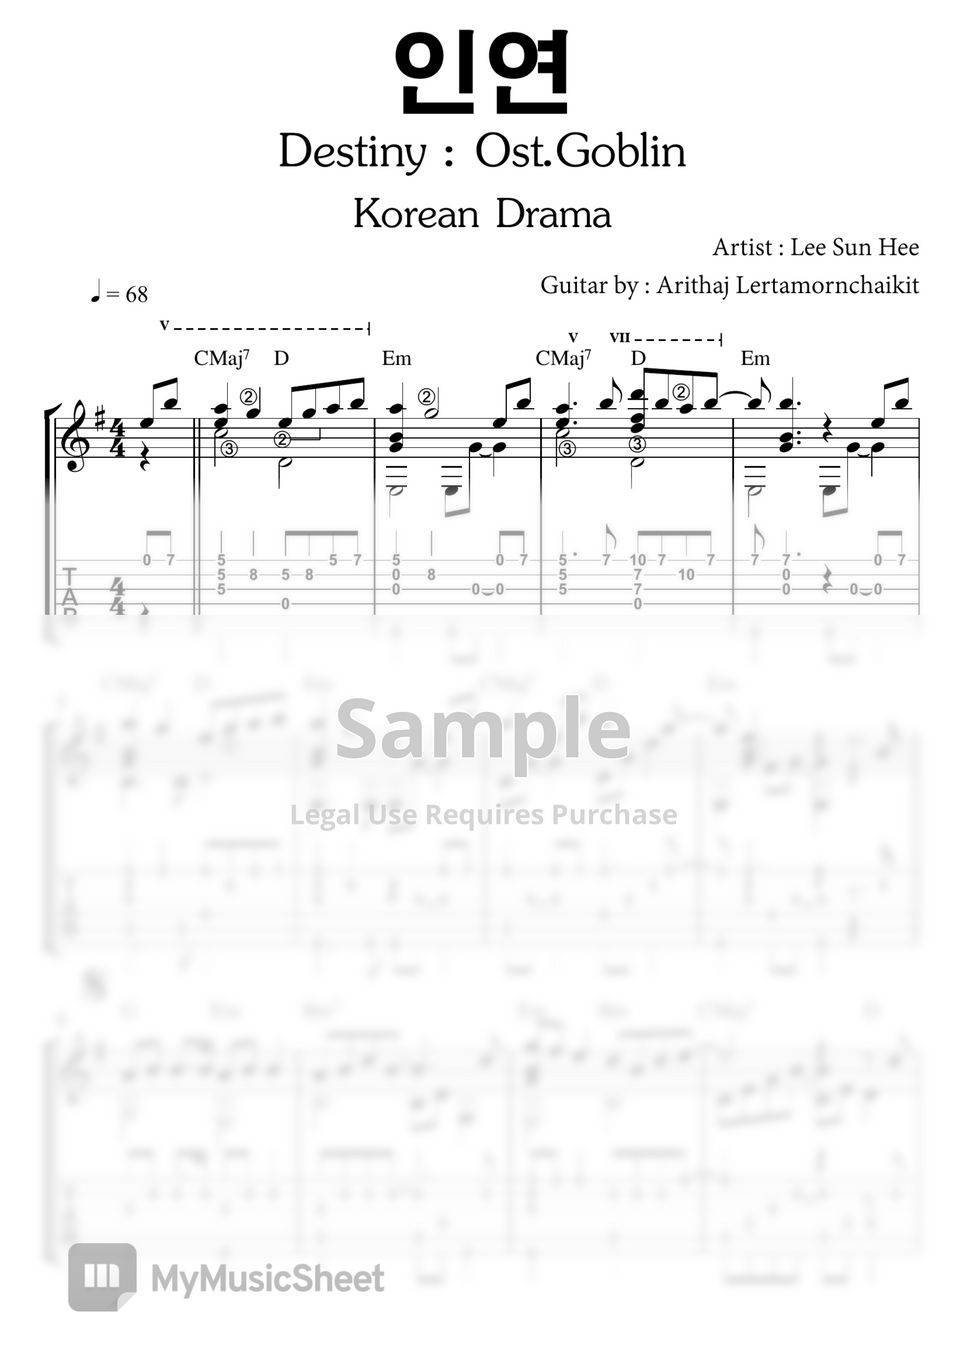 Lee Sun Hee - Destiny (Ost.Goblin) - Fingerstyle Guitar (Korean Drama) by Arithaj Lk